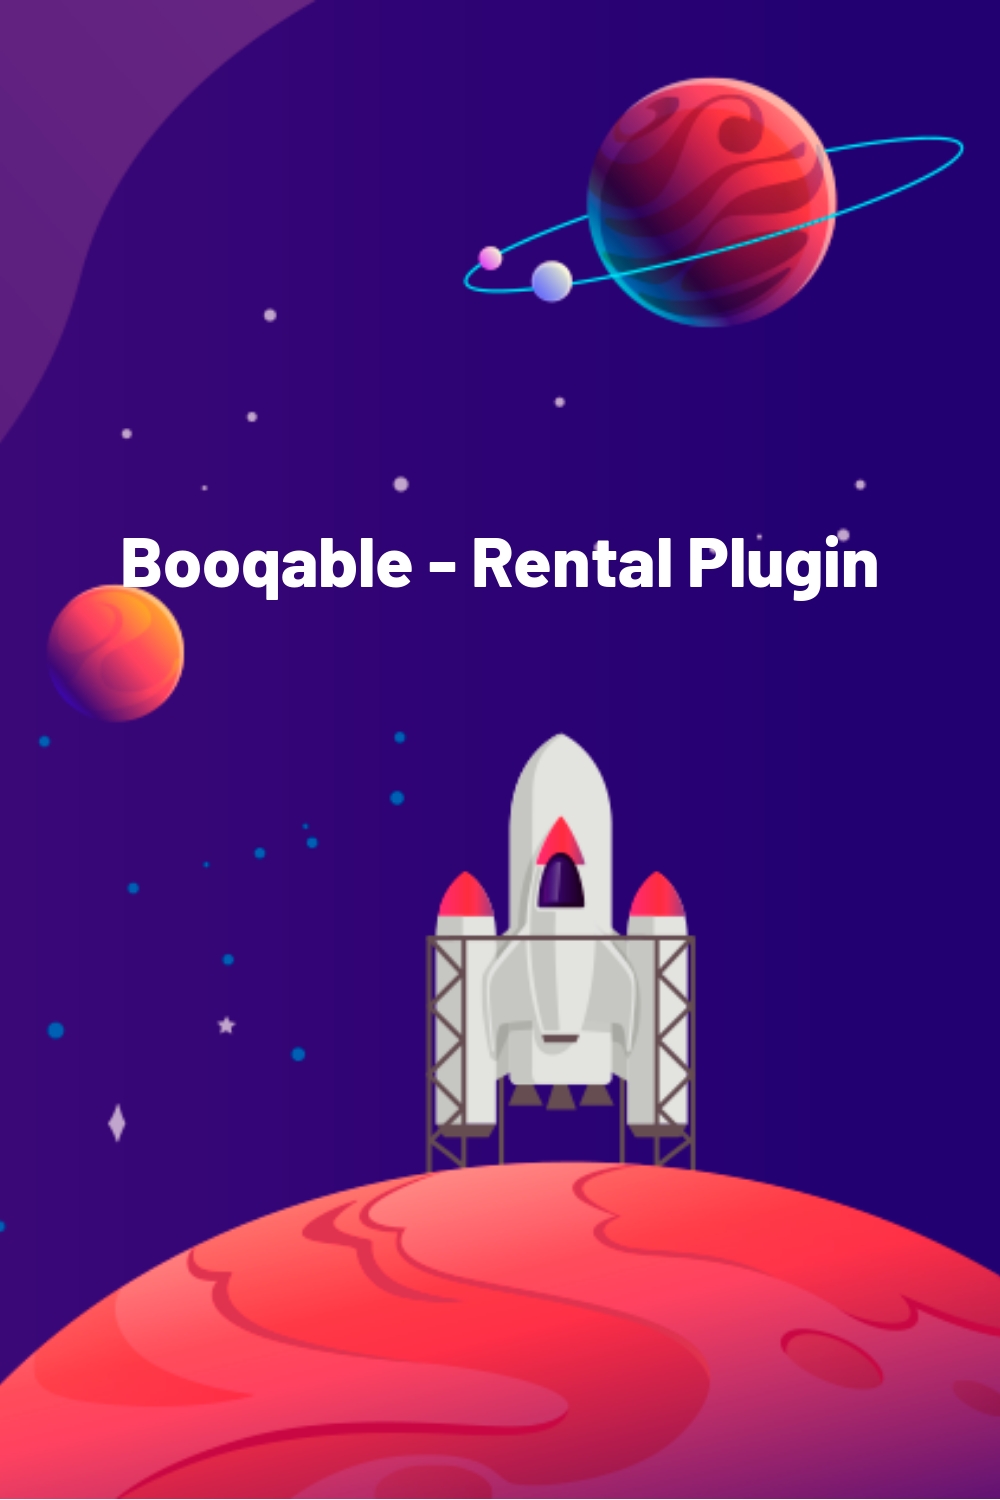 Booqable – Rental Plugin